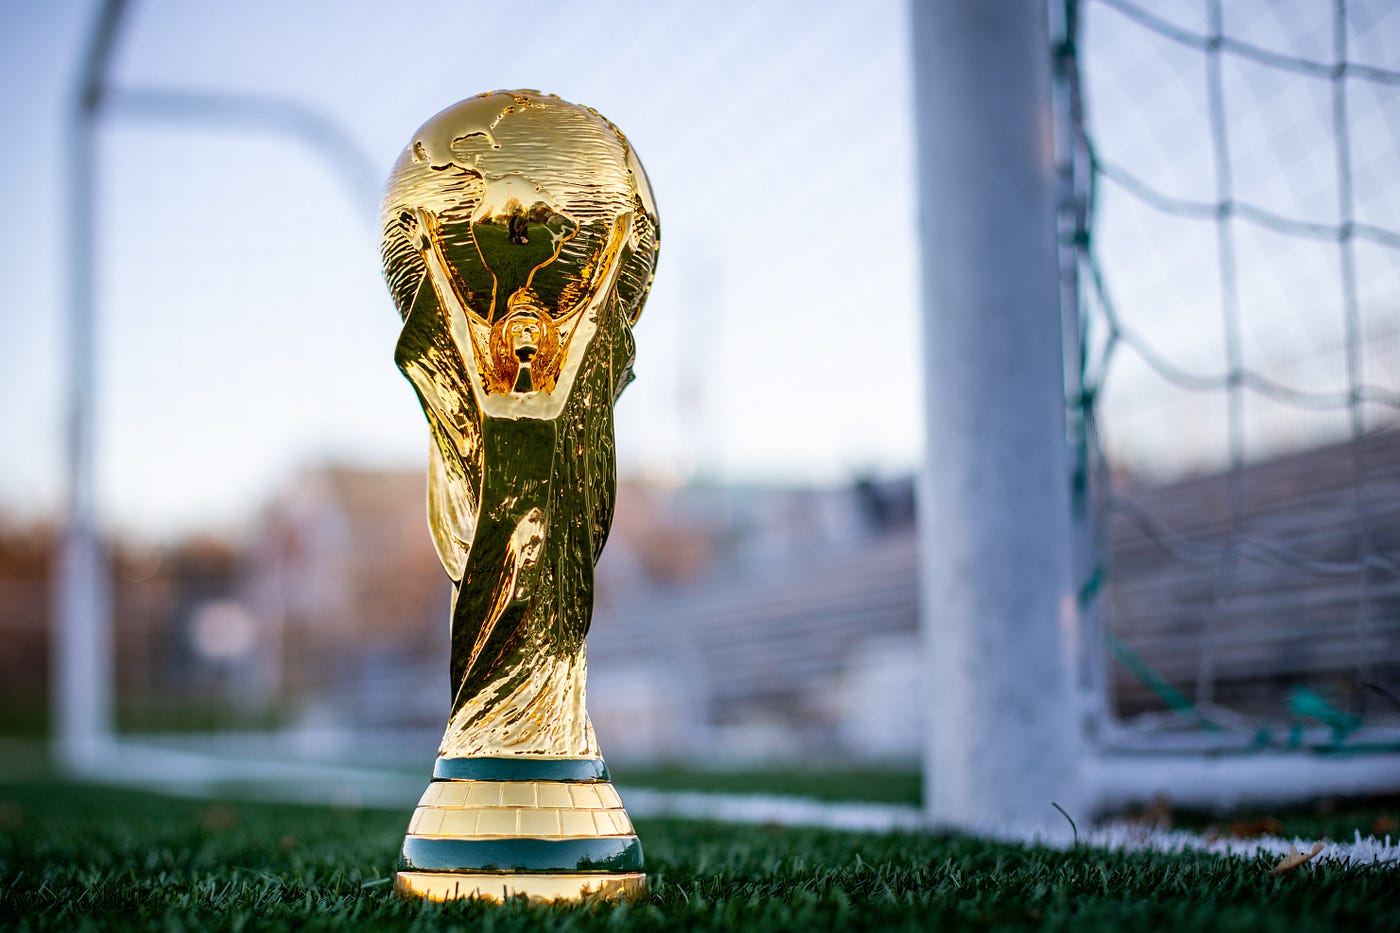 2022 FIFA Worldcup Qatar FULL LIVE DATASET